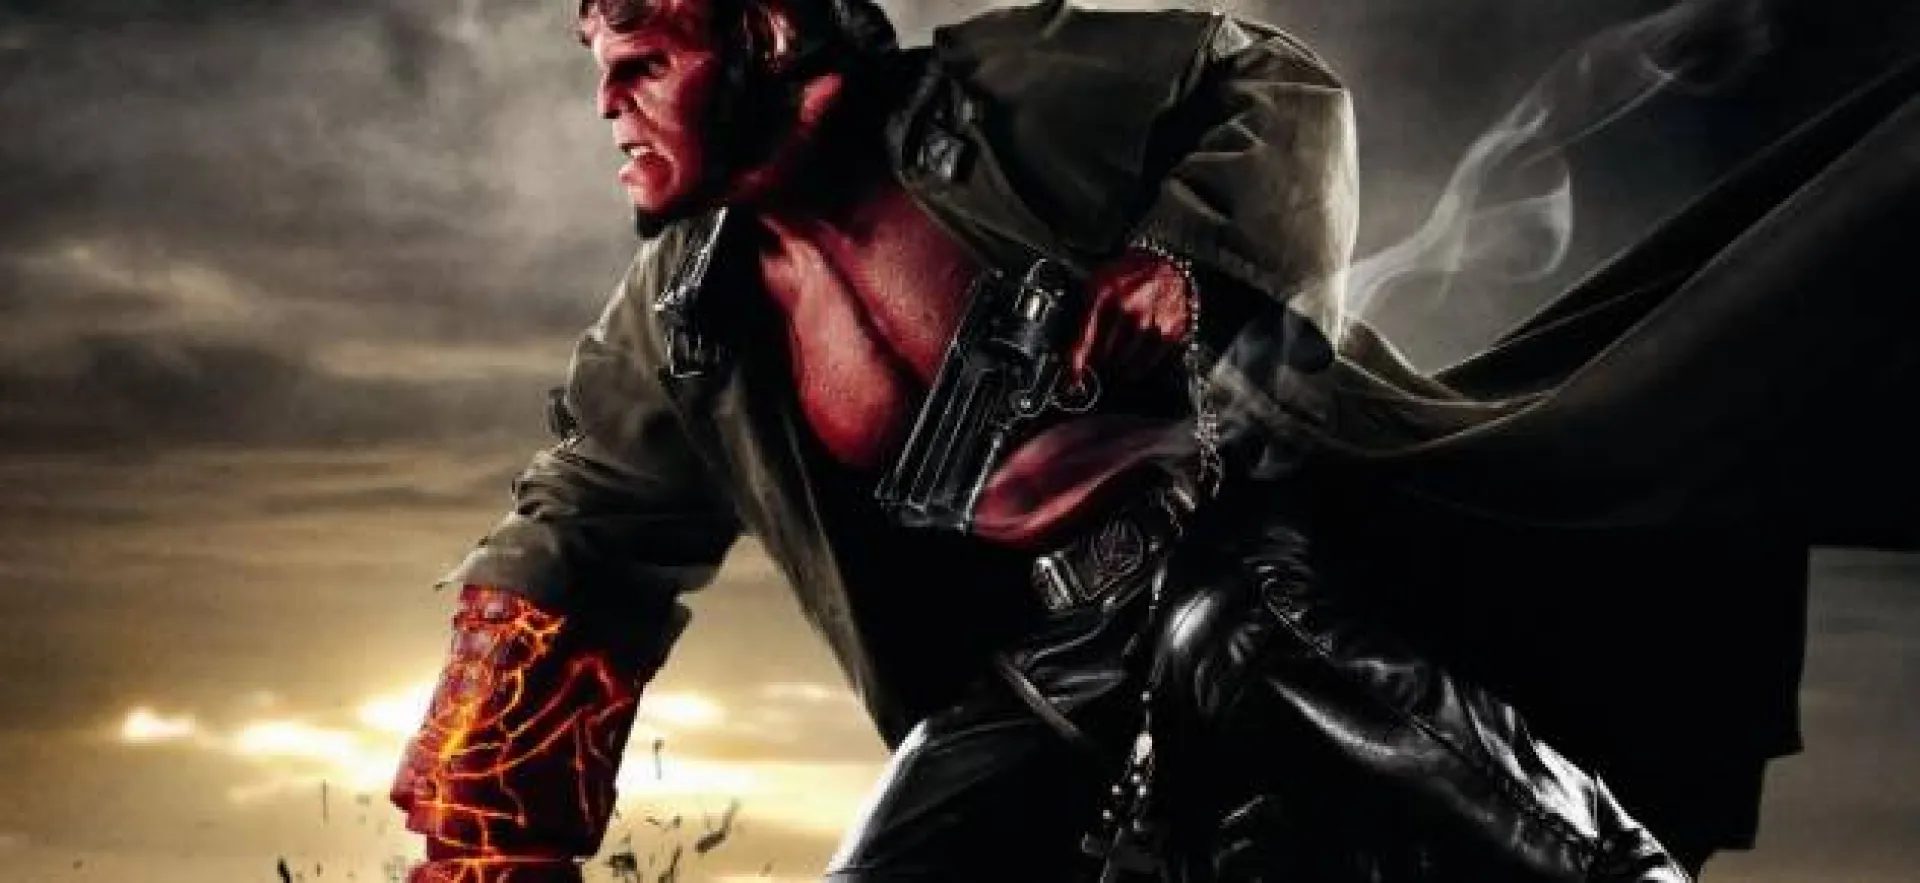 Hellboy II - The Golden Army